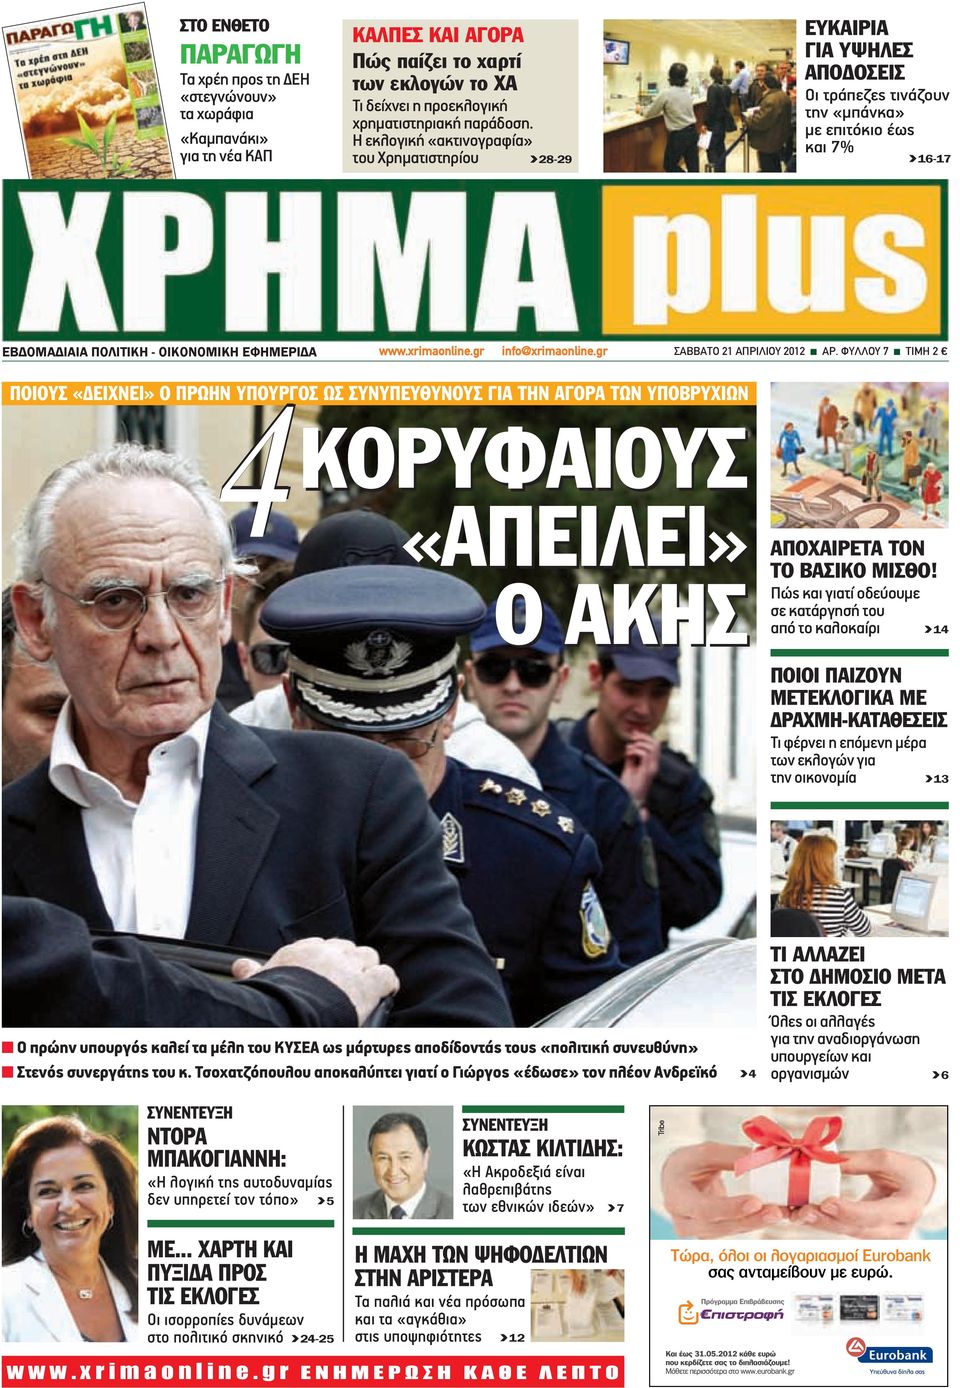 xrimaonline.gr info@xrimaonline.gr ΣΑΒΒΑΤΟ 21 AΠΡΙΛΙΟΥ 2012 n ΑΡ.